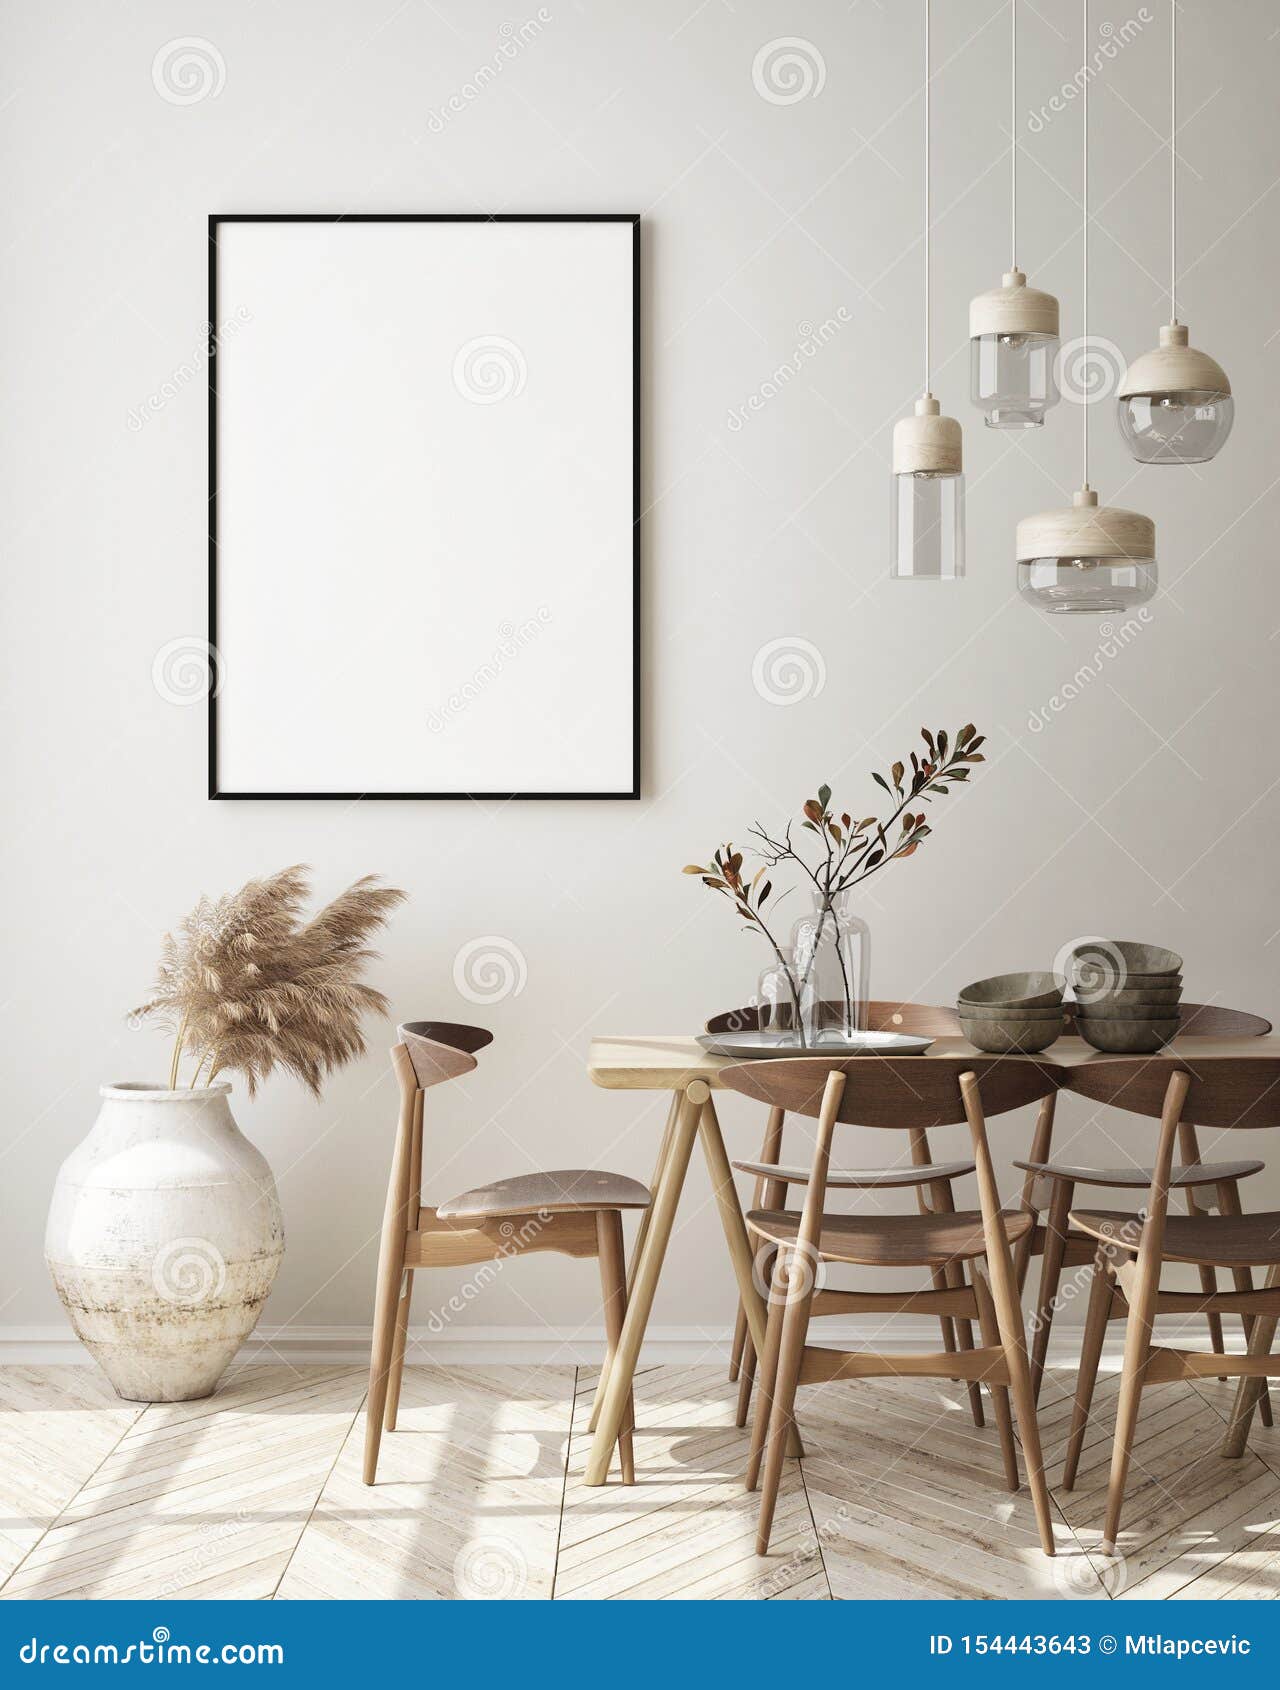 mock up poster frame in modern interior background, living room, scandinavian style, 3d render